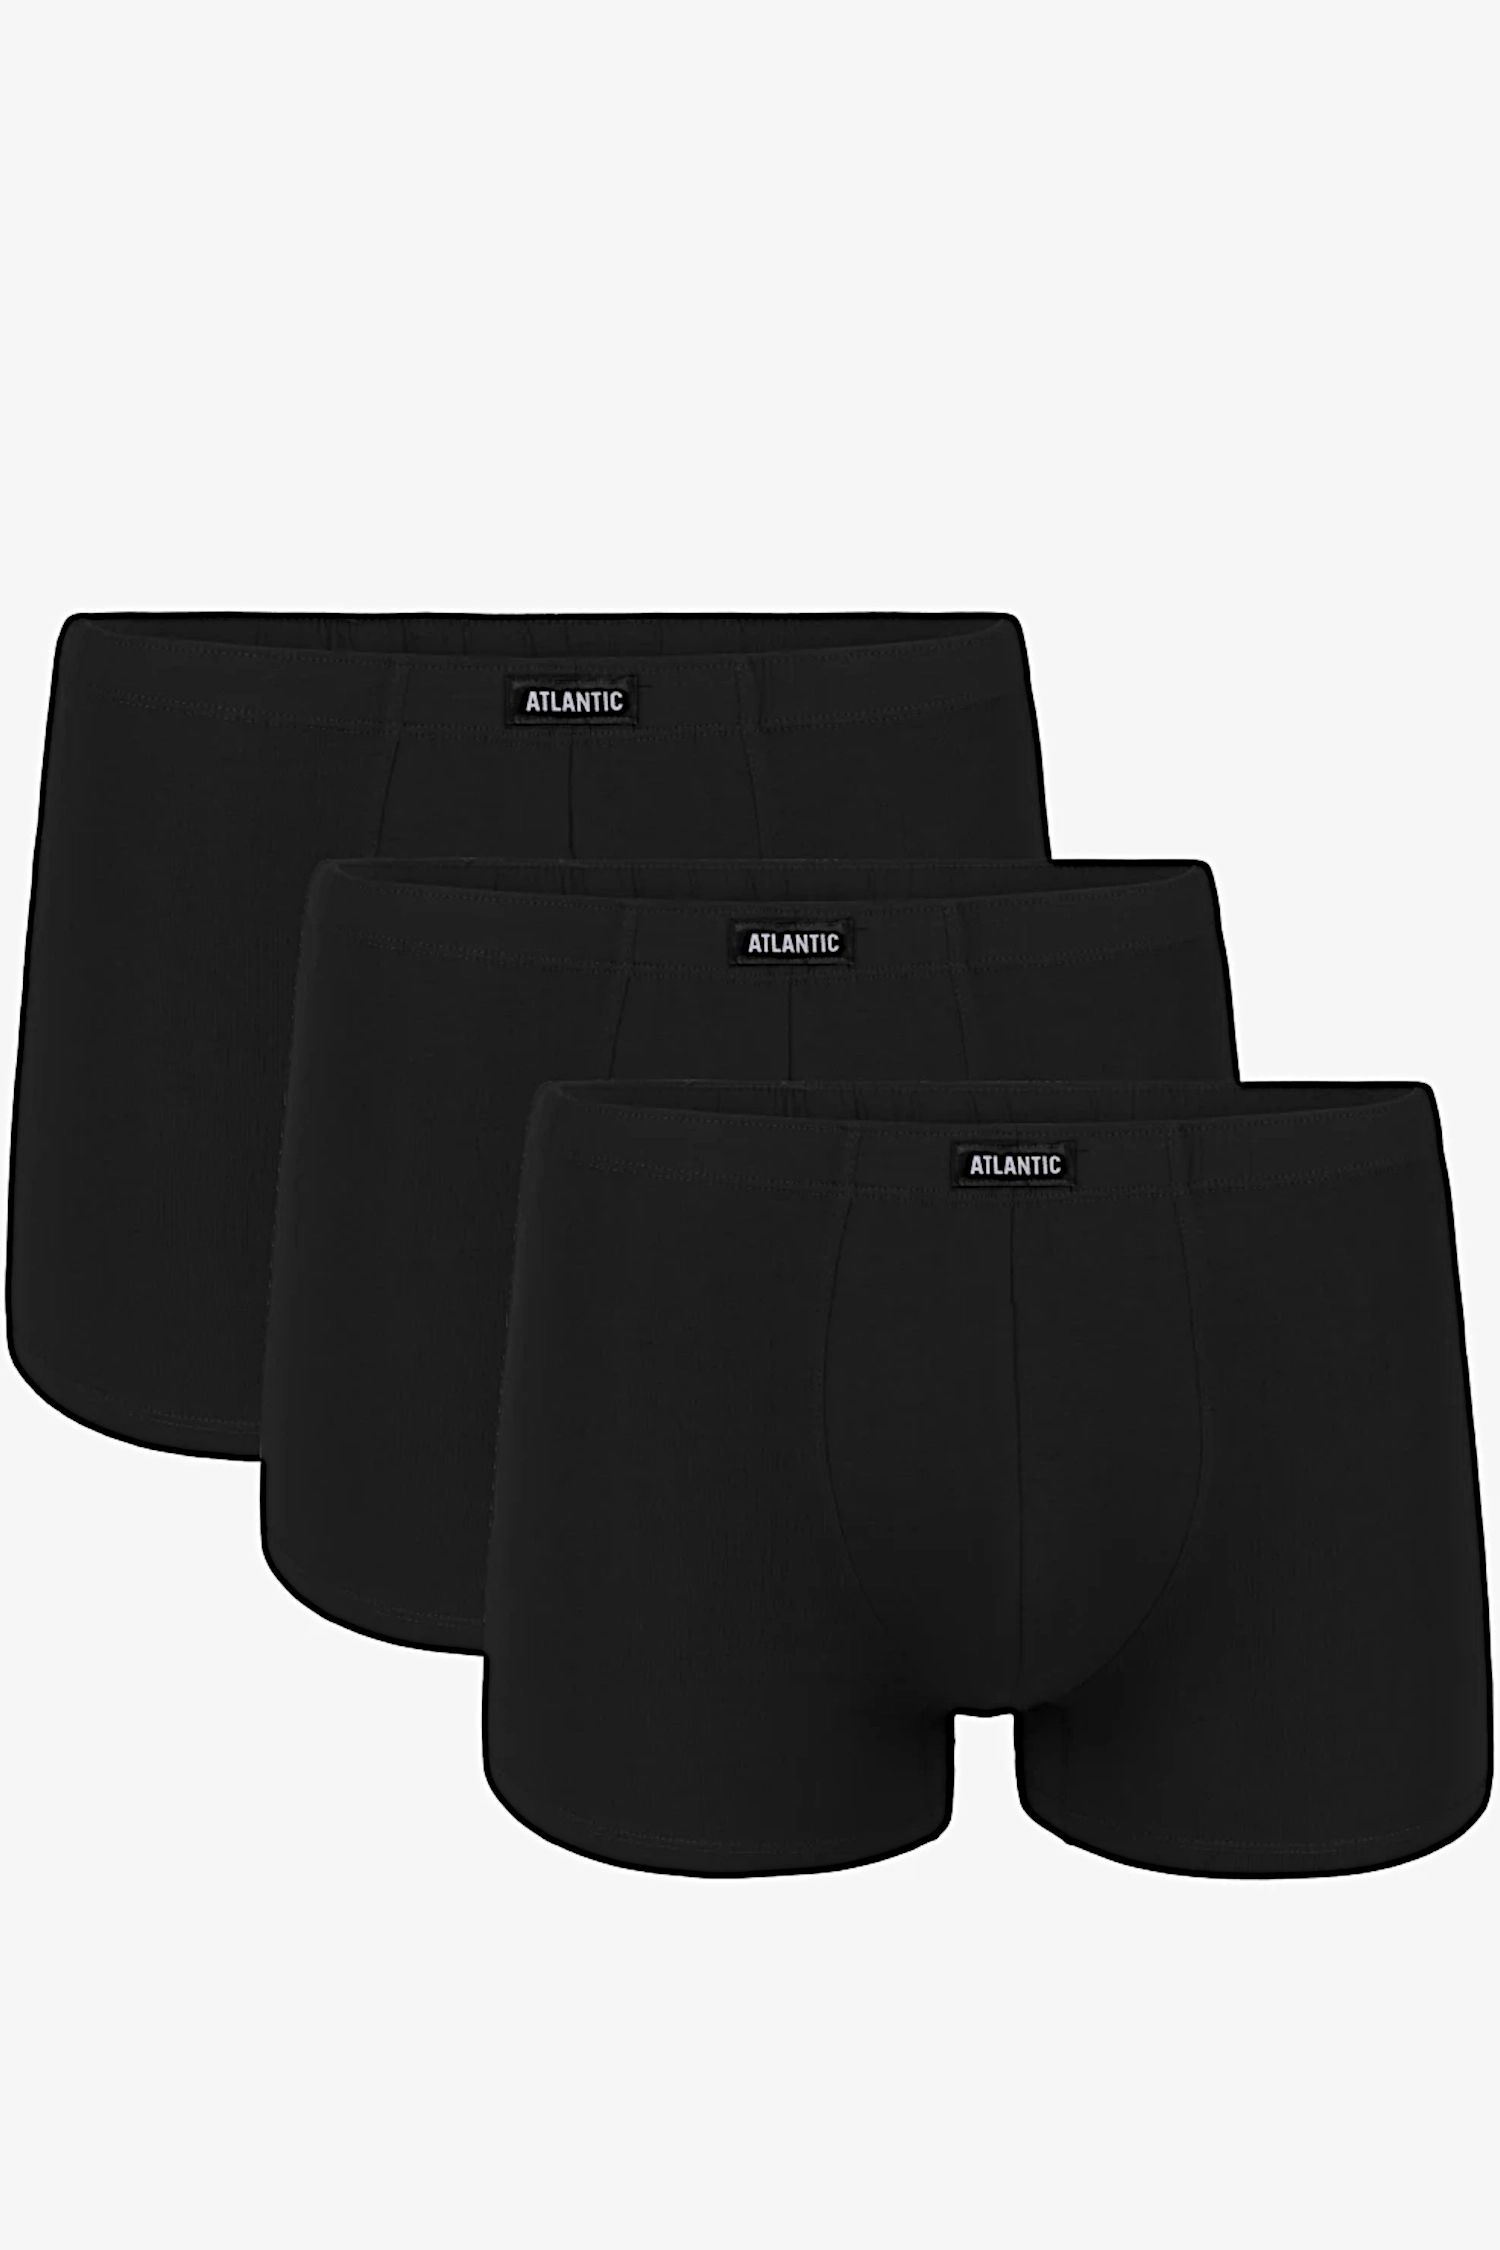 E-shop Pánske boxerky 007 black 3 pack